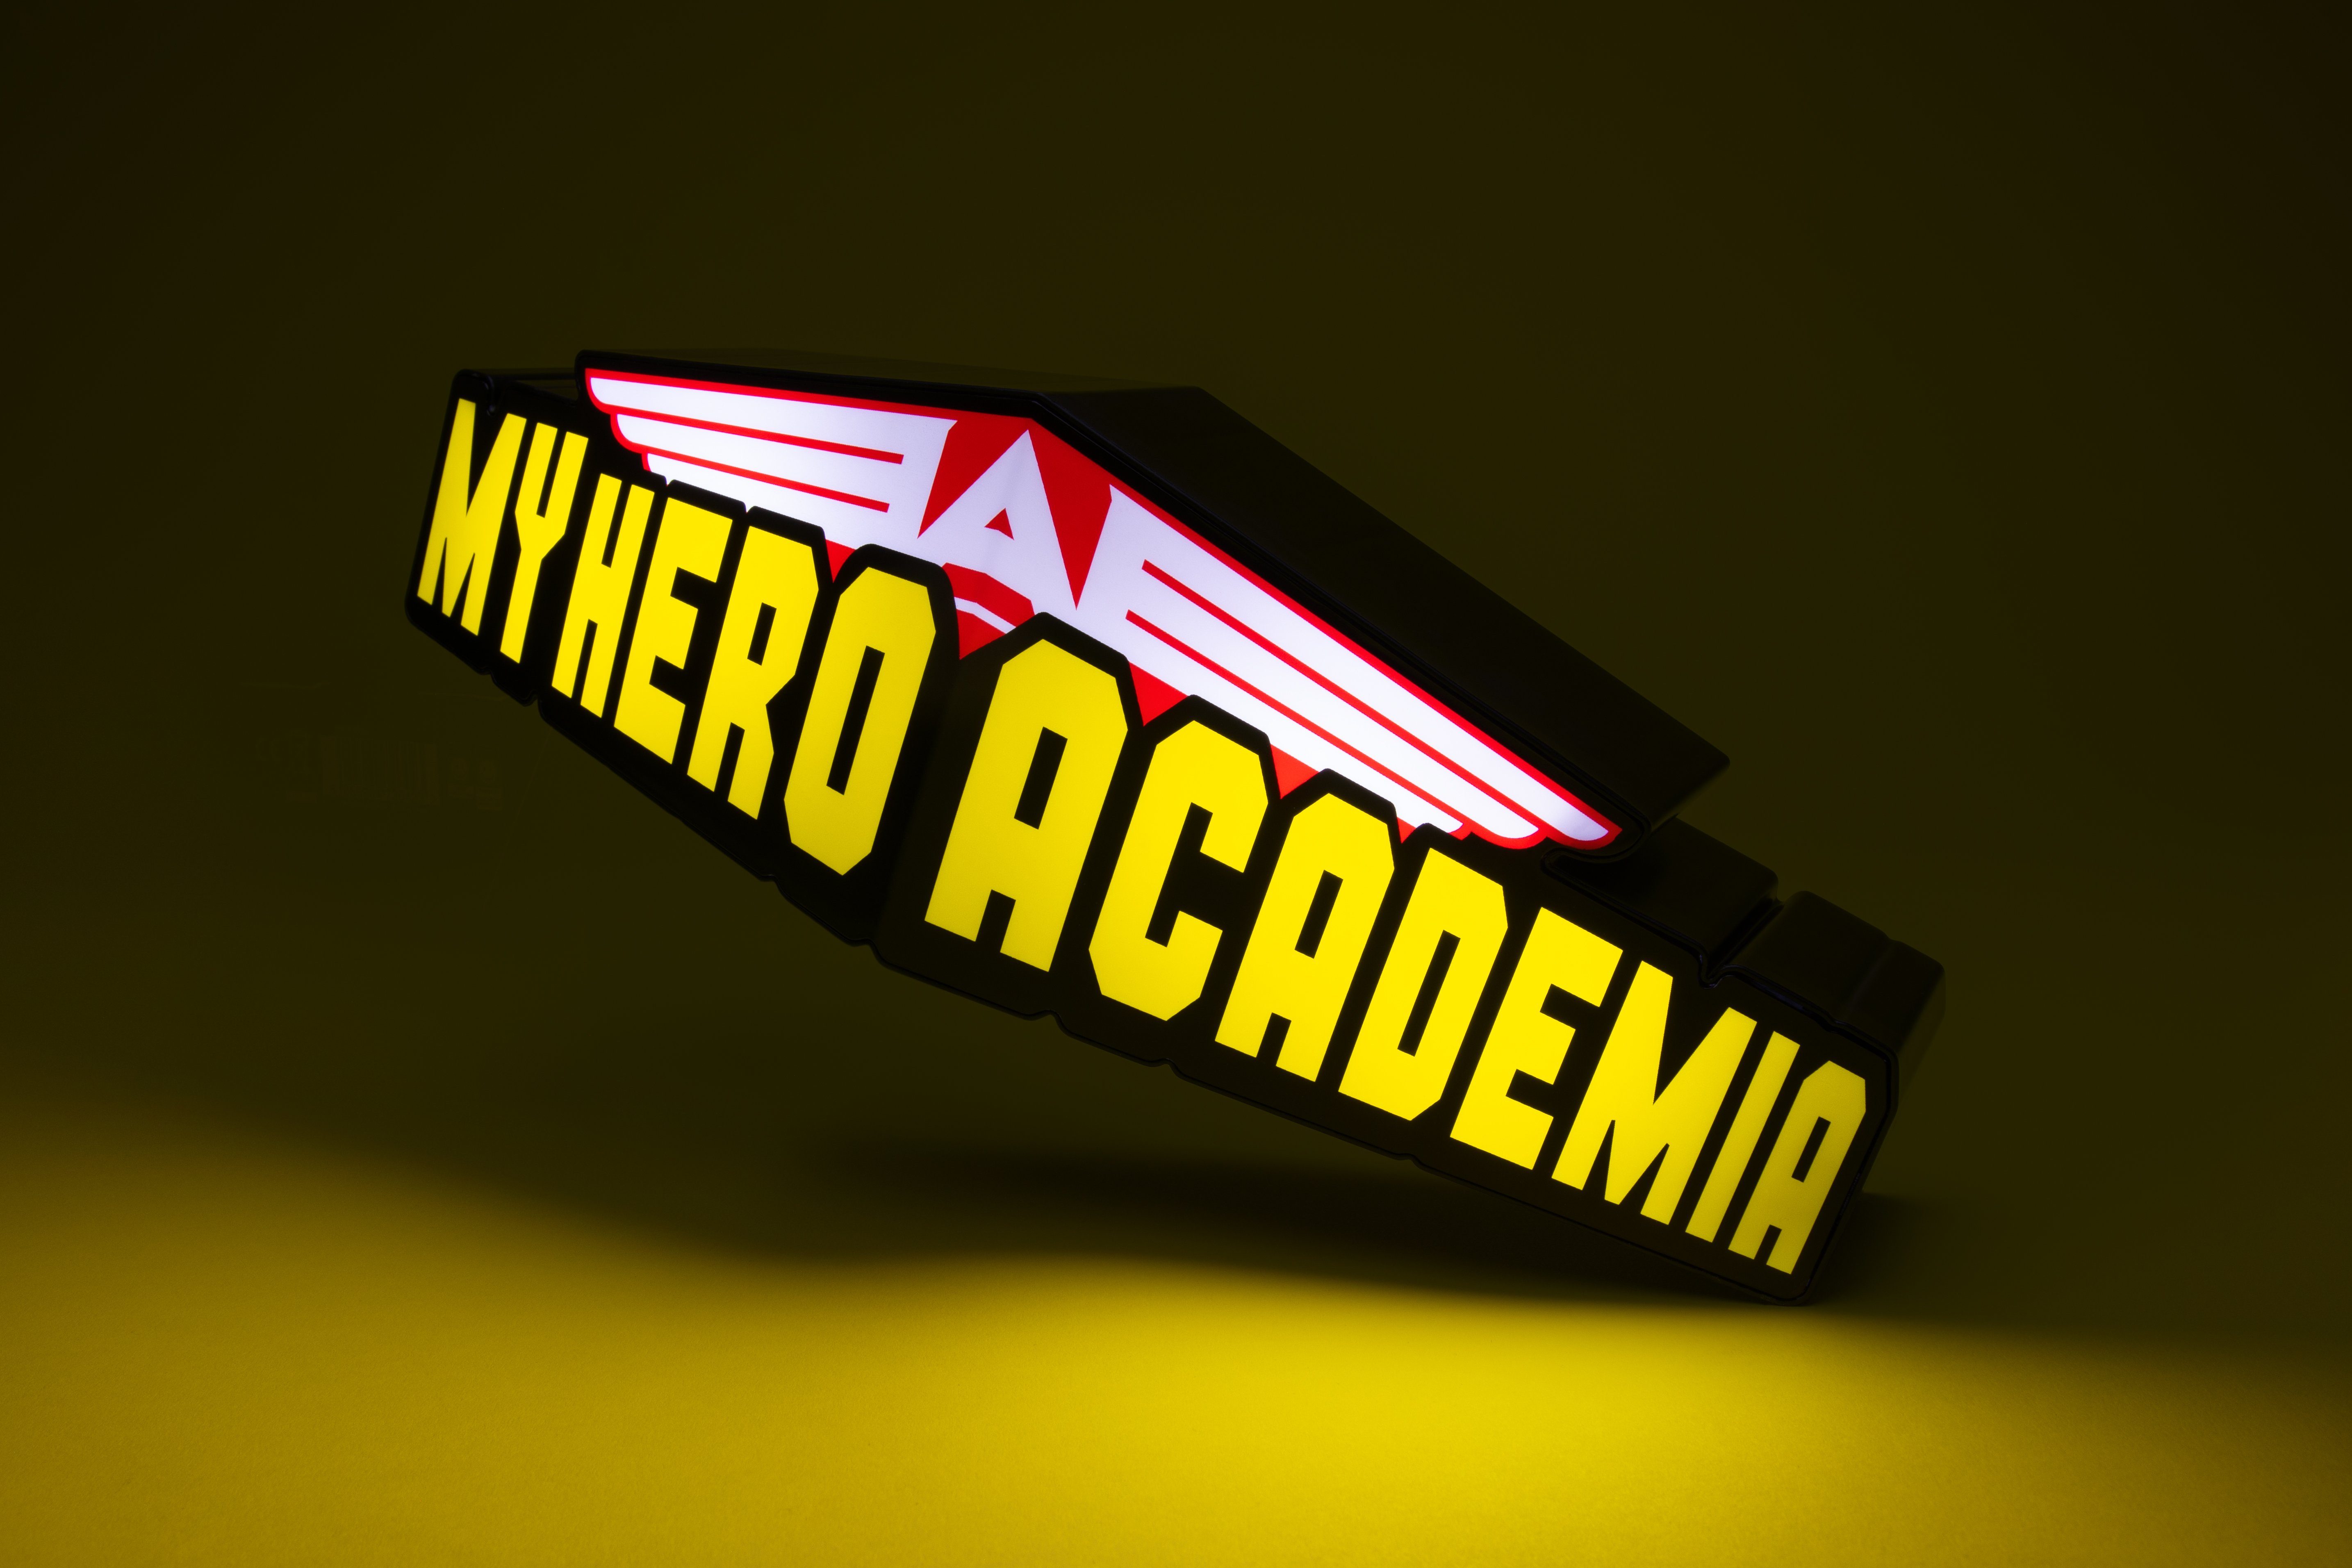 Paladone Dekolicht Hero LED Academia Leuchte Logo My